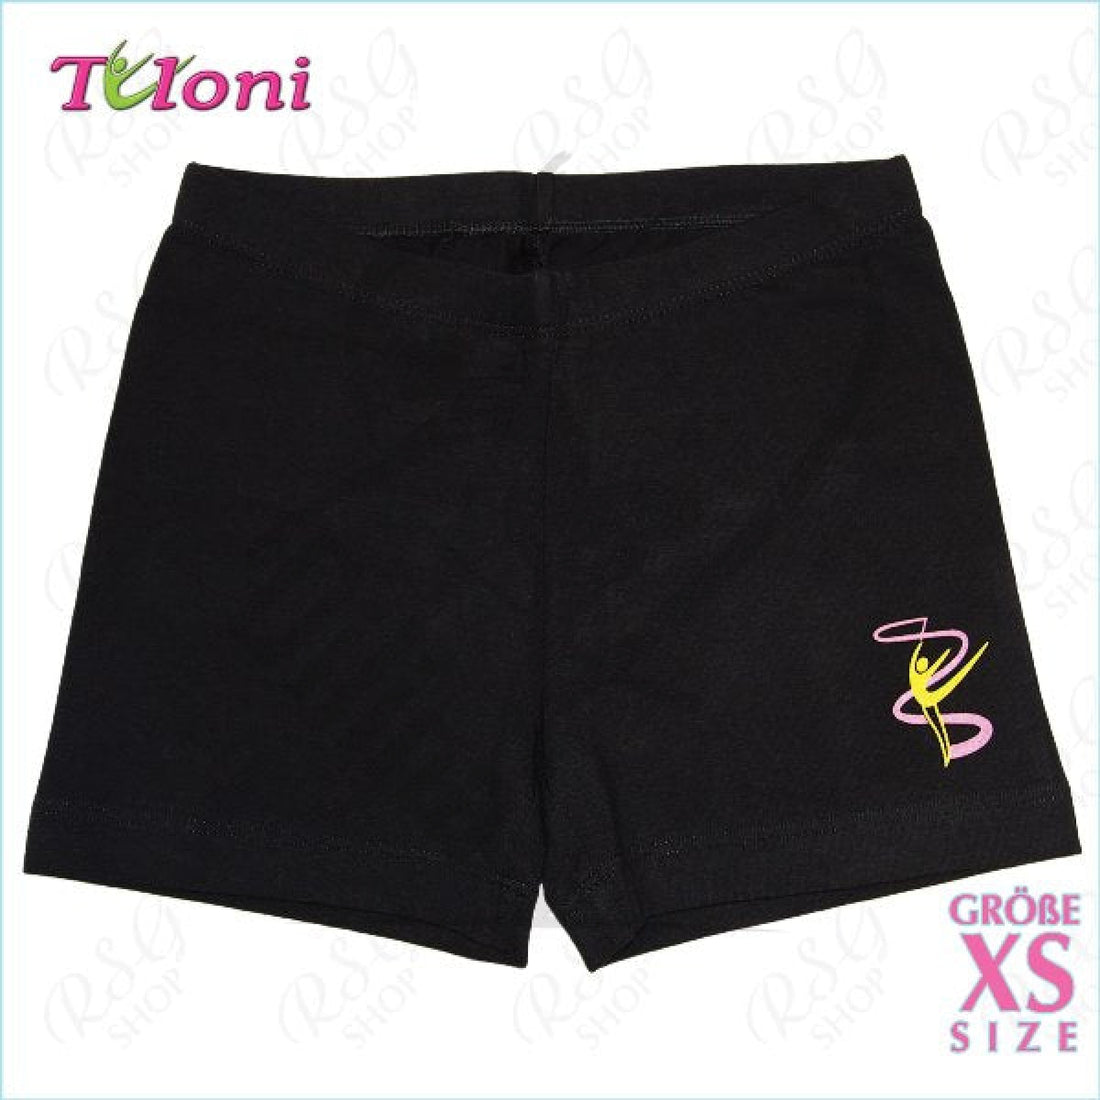 Tuloni Shorts Black With Gymnasts Emblem Xs (140-146)